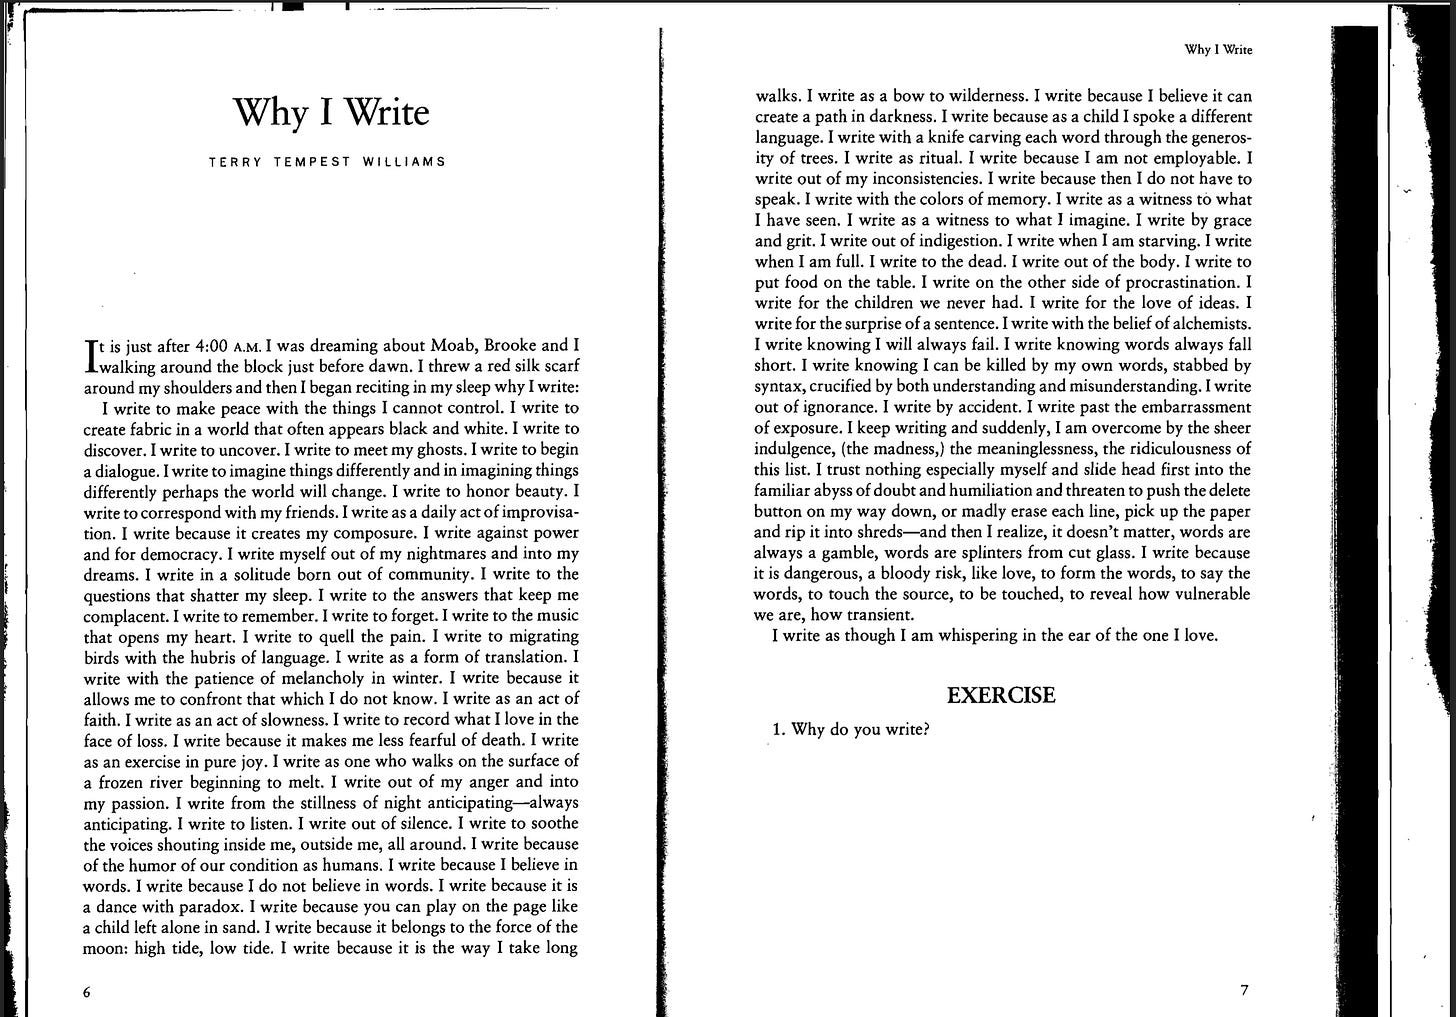 A screenshot of Terry Tempest Williams' essay Why I Write